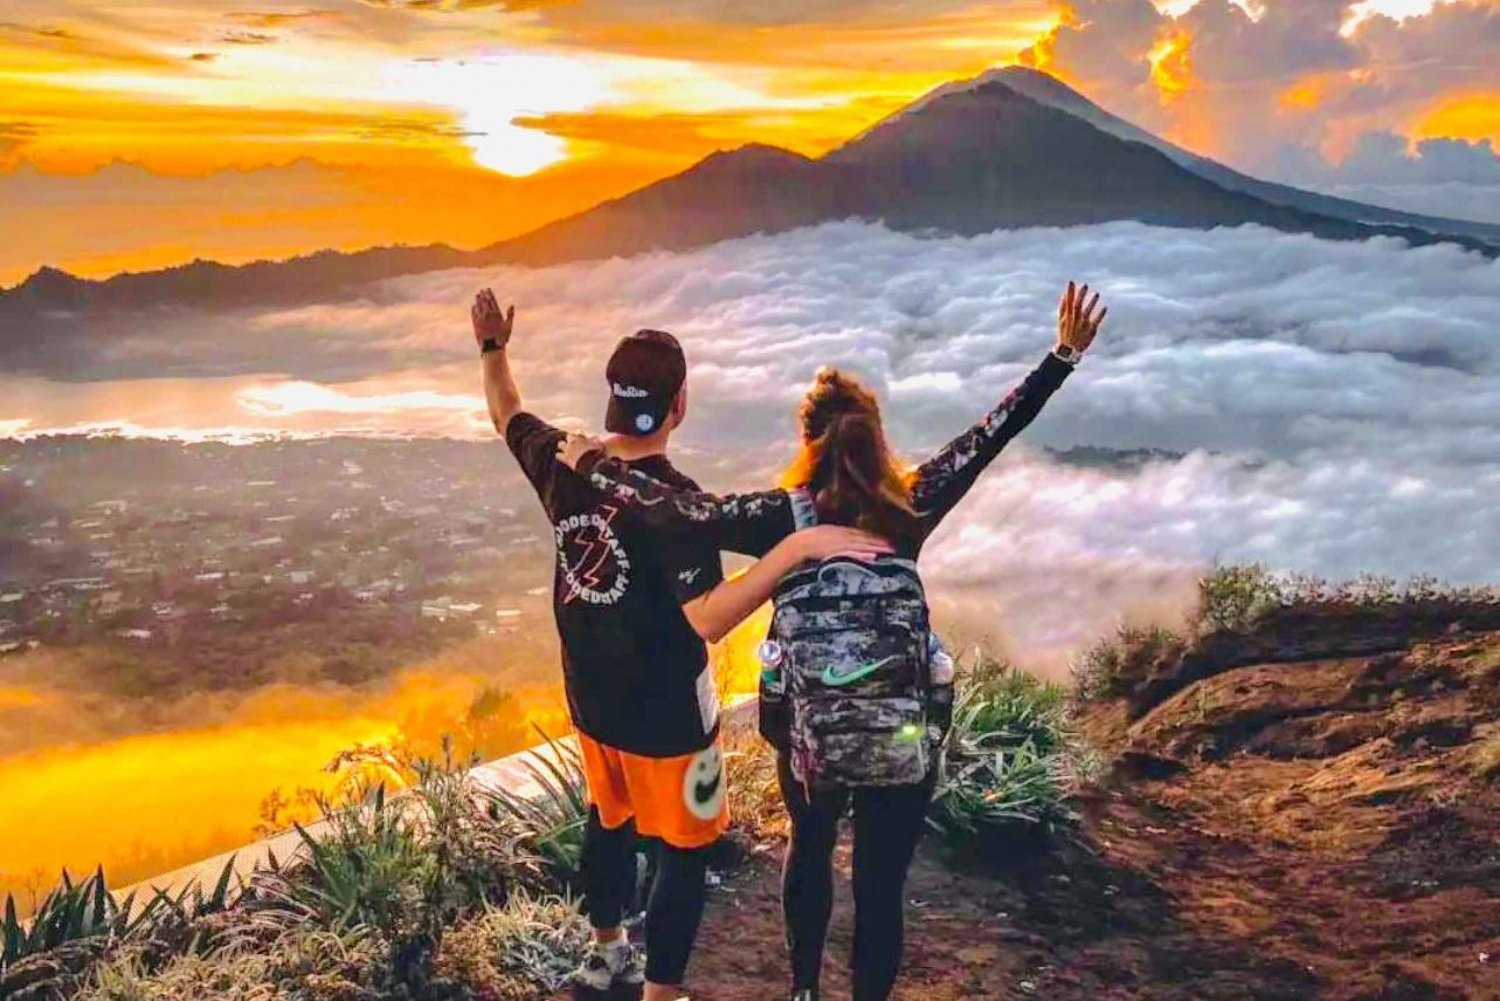 Mount Batur Sunrise Hike & Hot Springs - All Inclusive tours